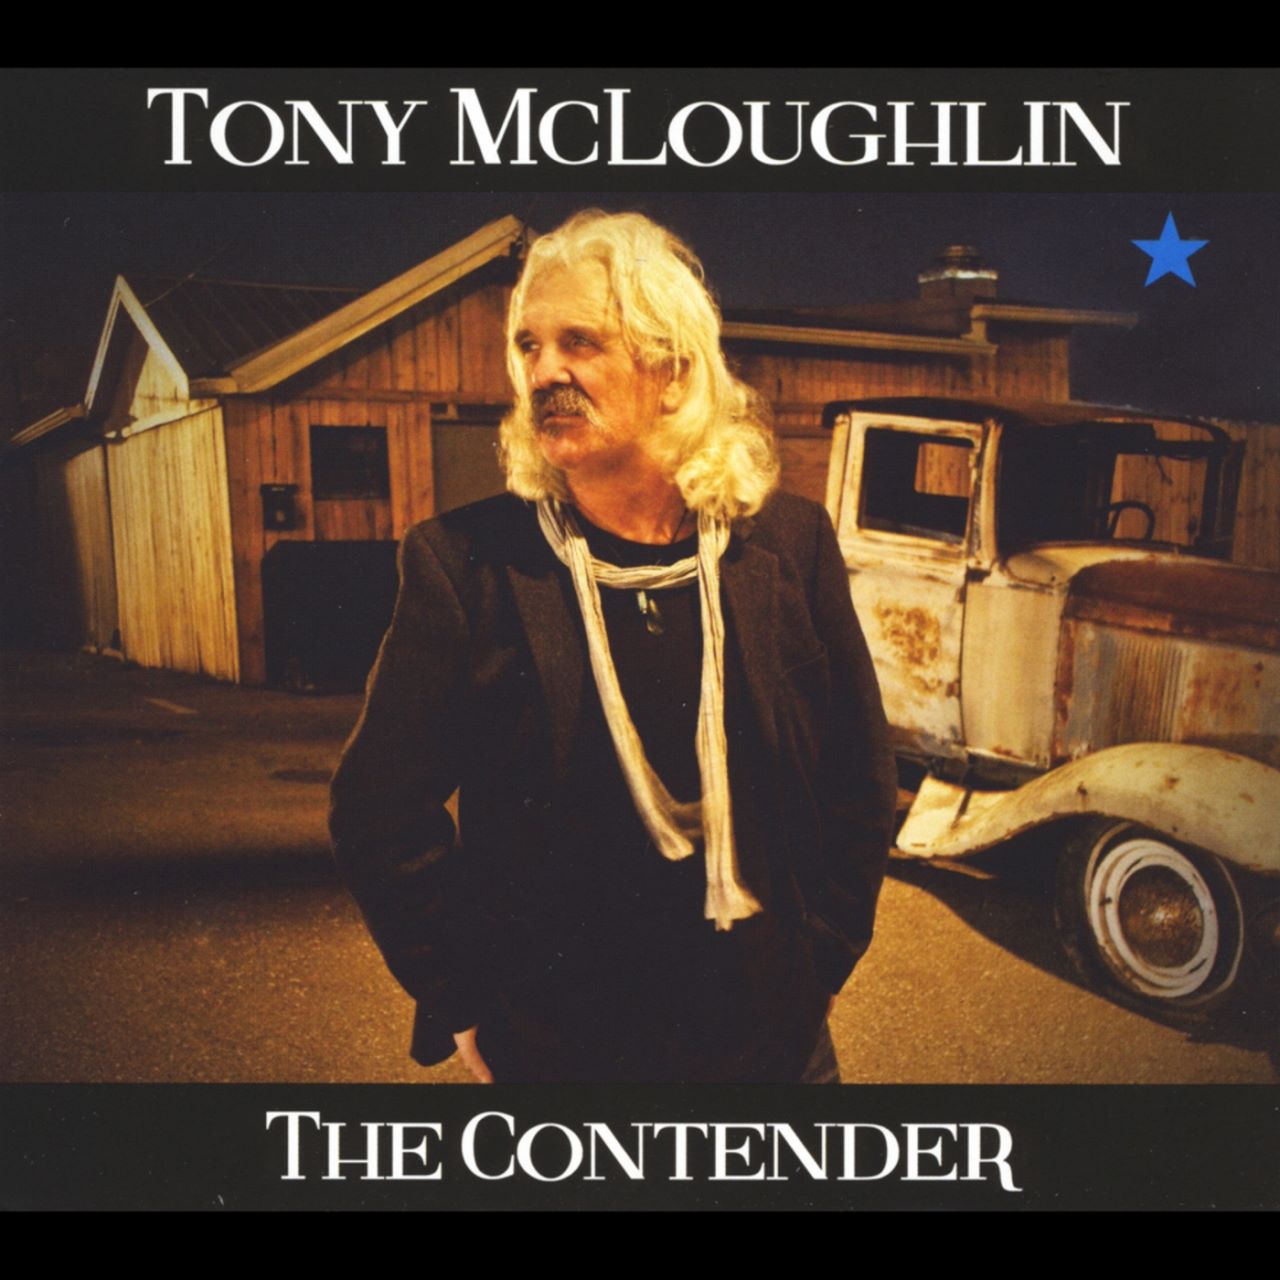 Tony McLoughlin - The Contender cover album